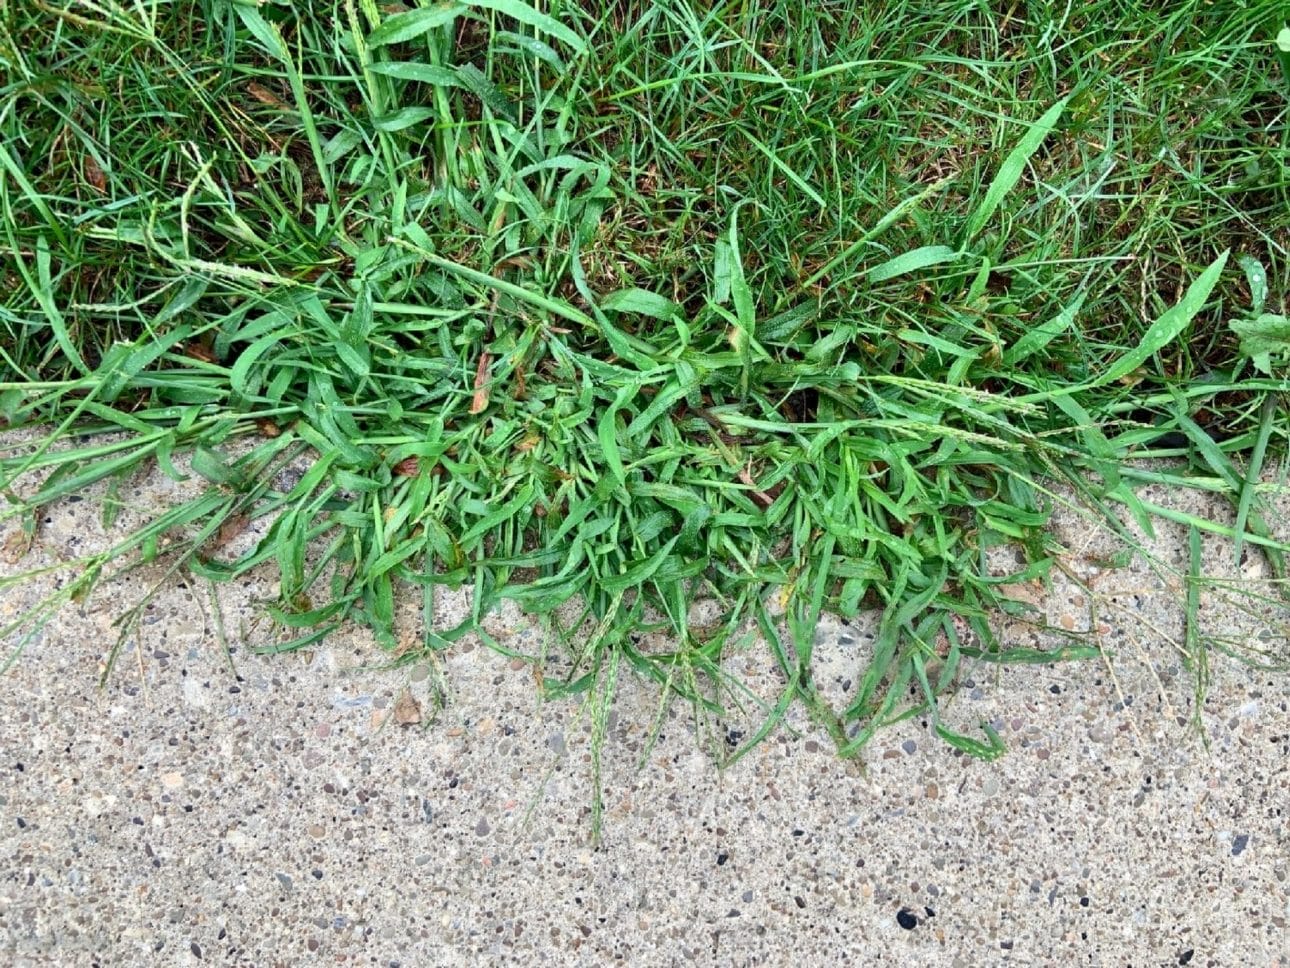 Close-up image of crabgrass